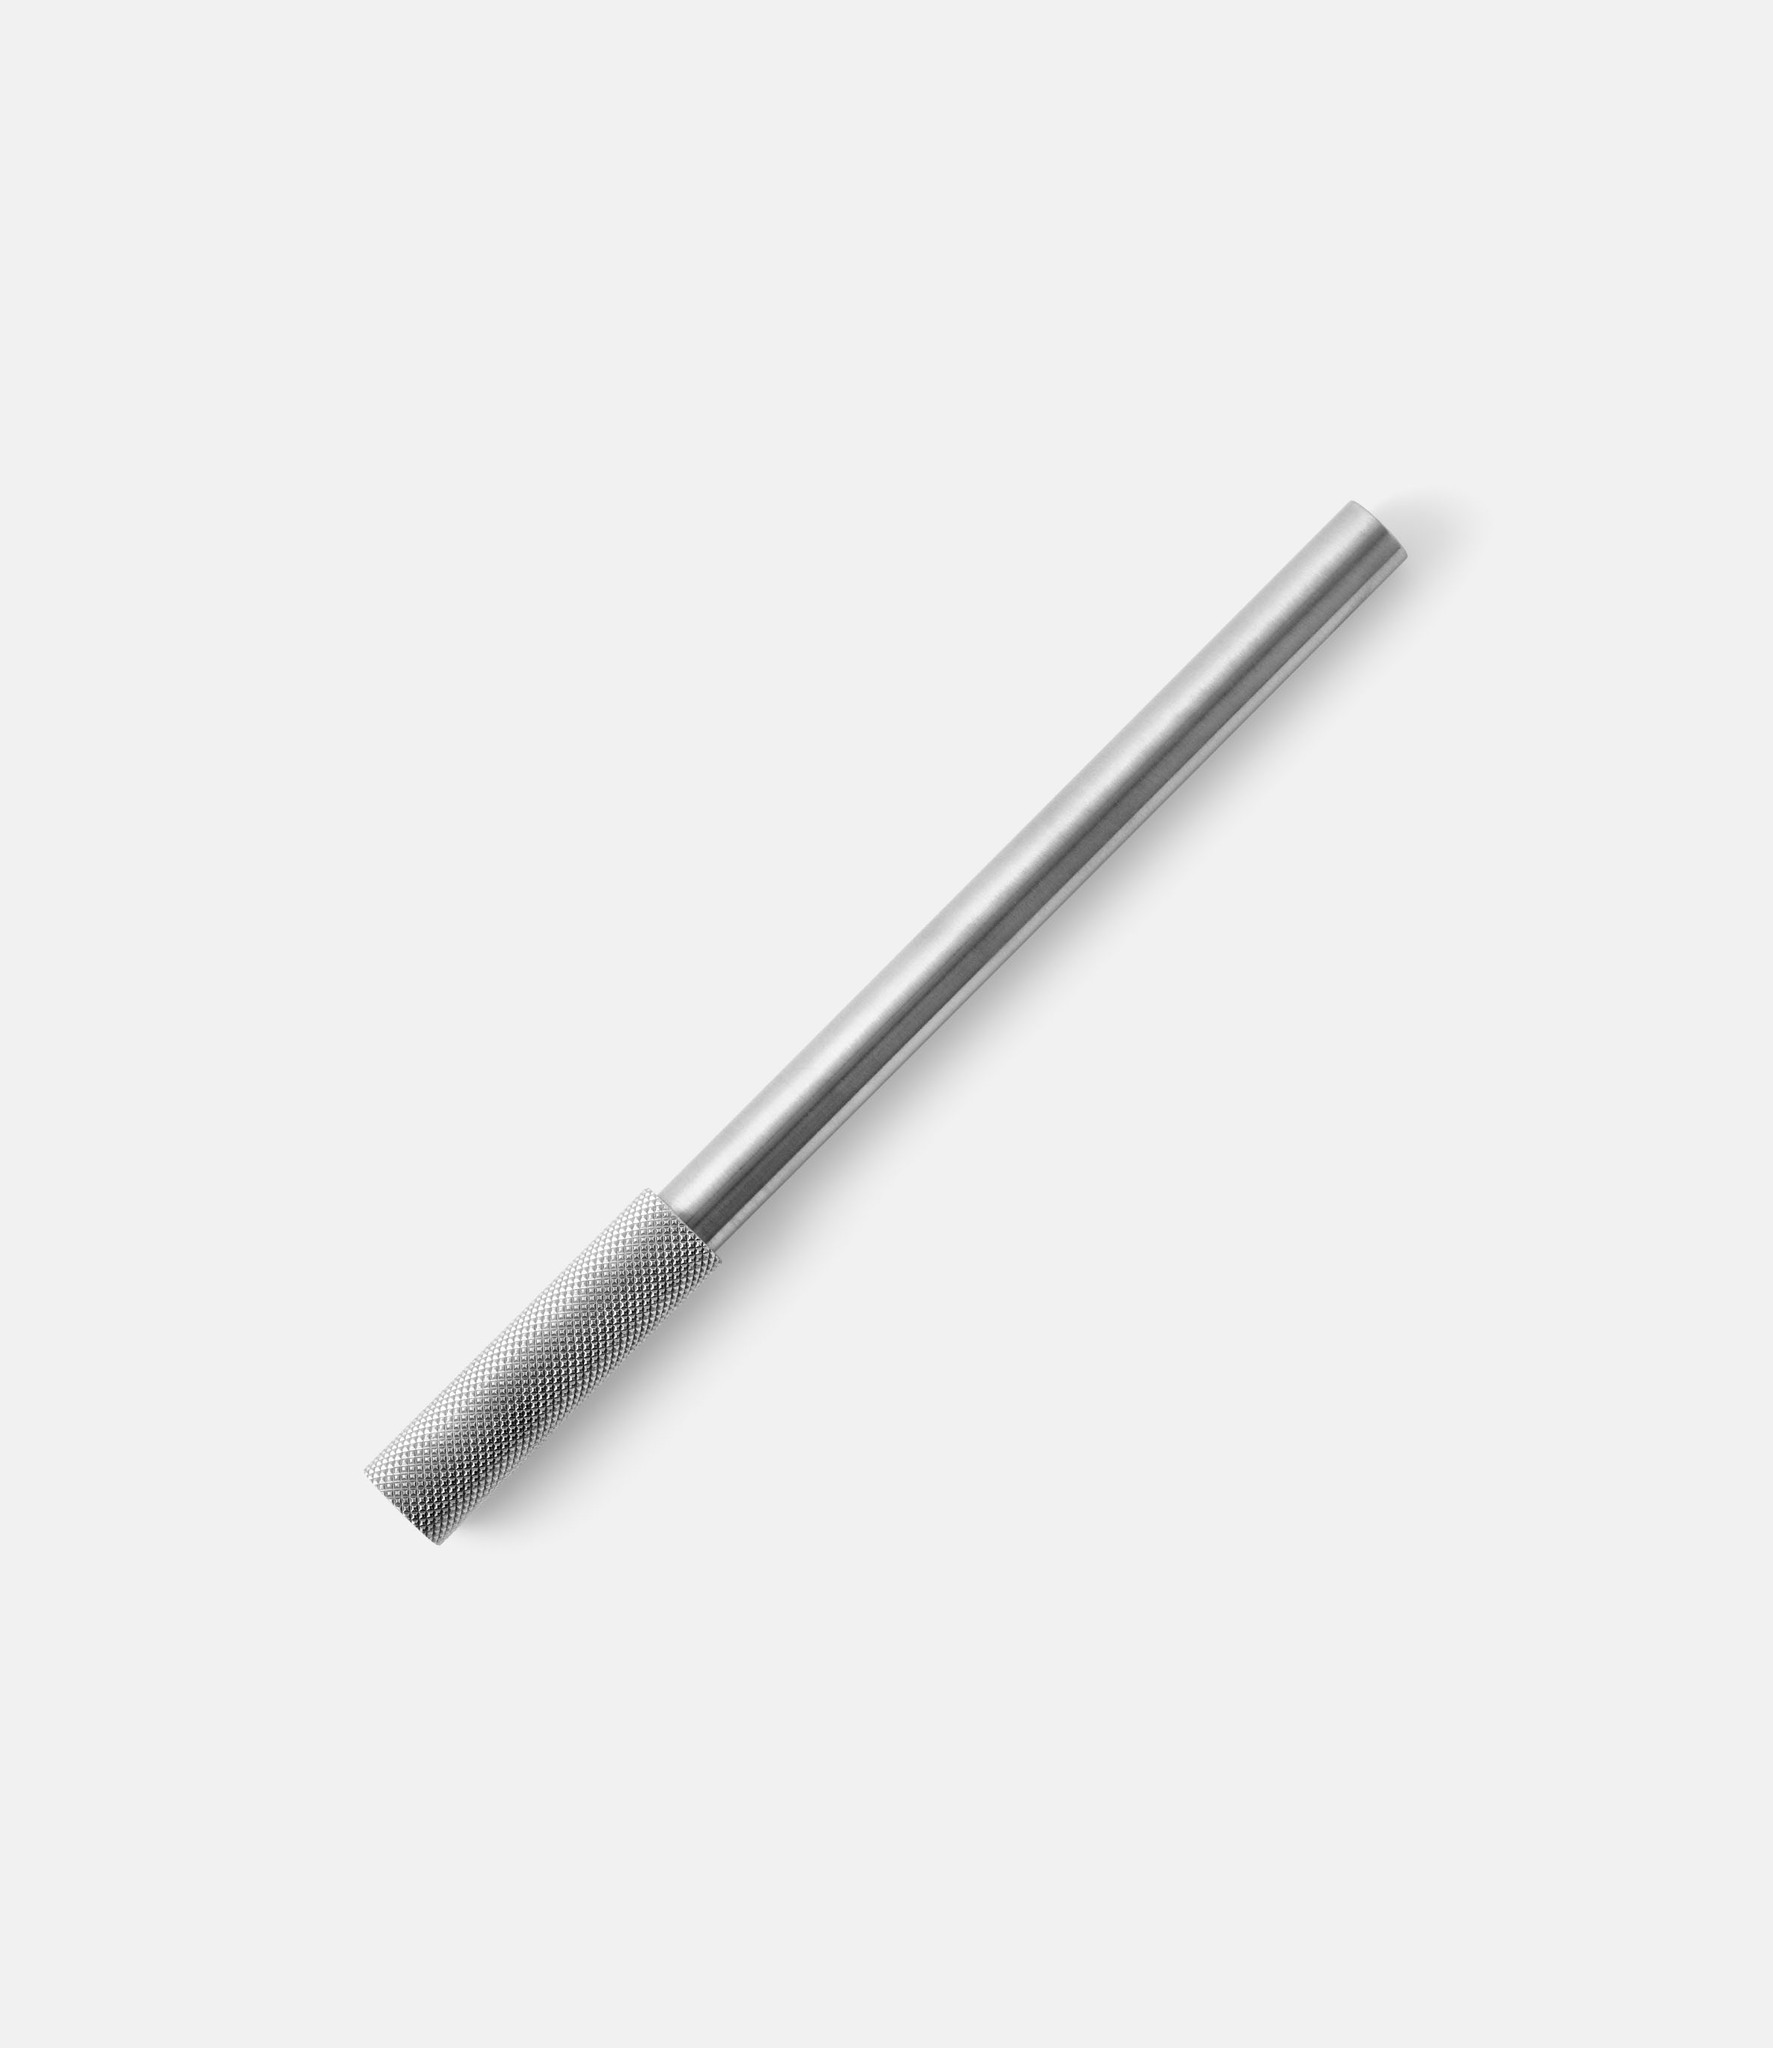 Ensso Uno ХL — ручка из стали